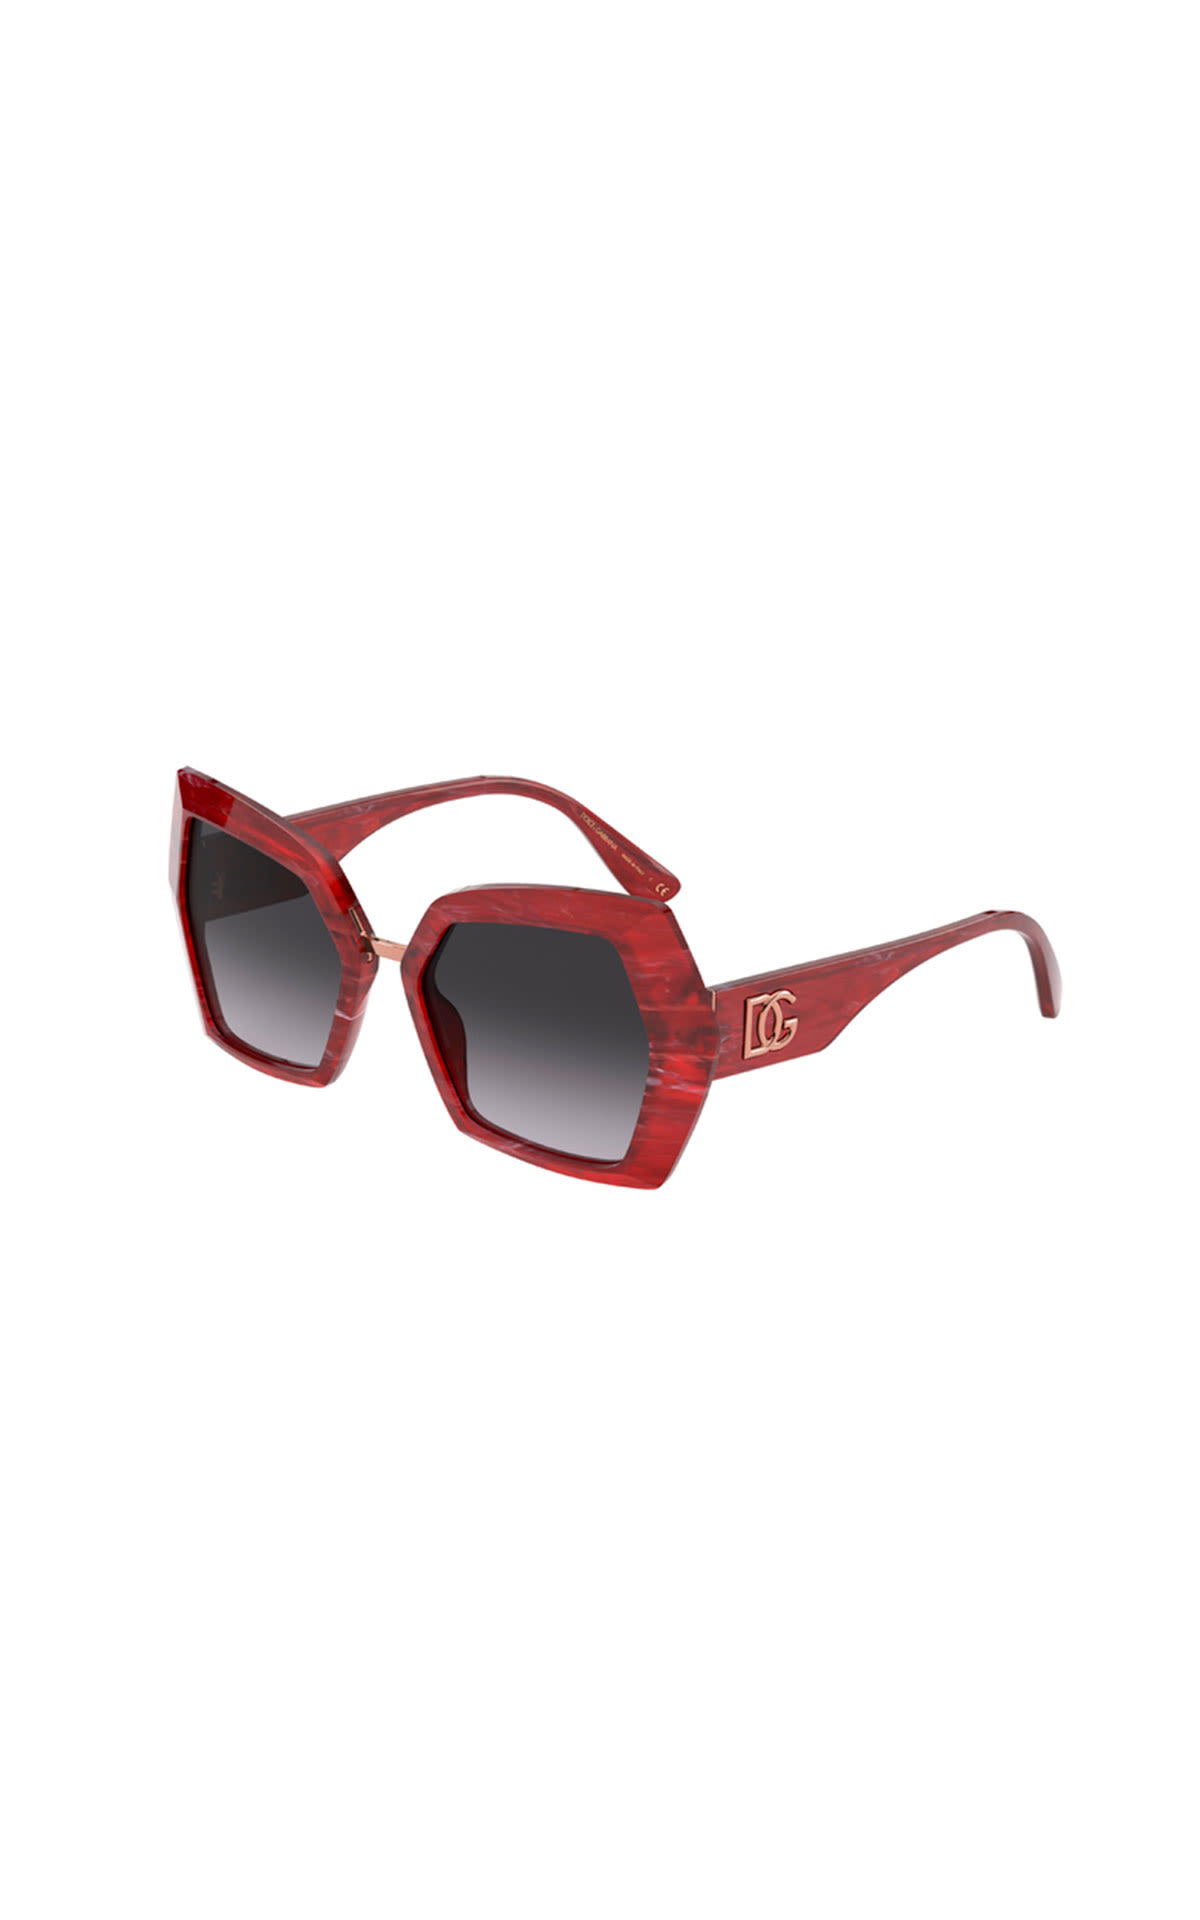 Dolce Gabbana maroon pasta sunglasses Sunglass hut